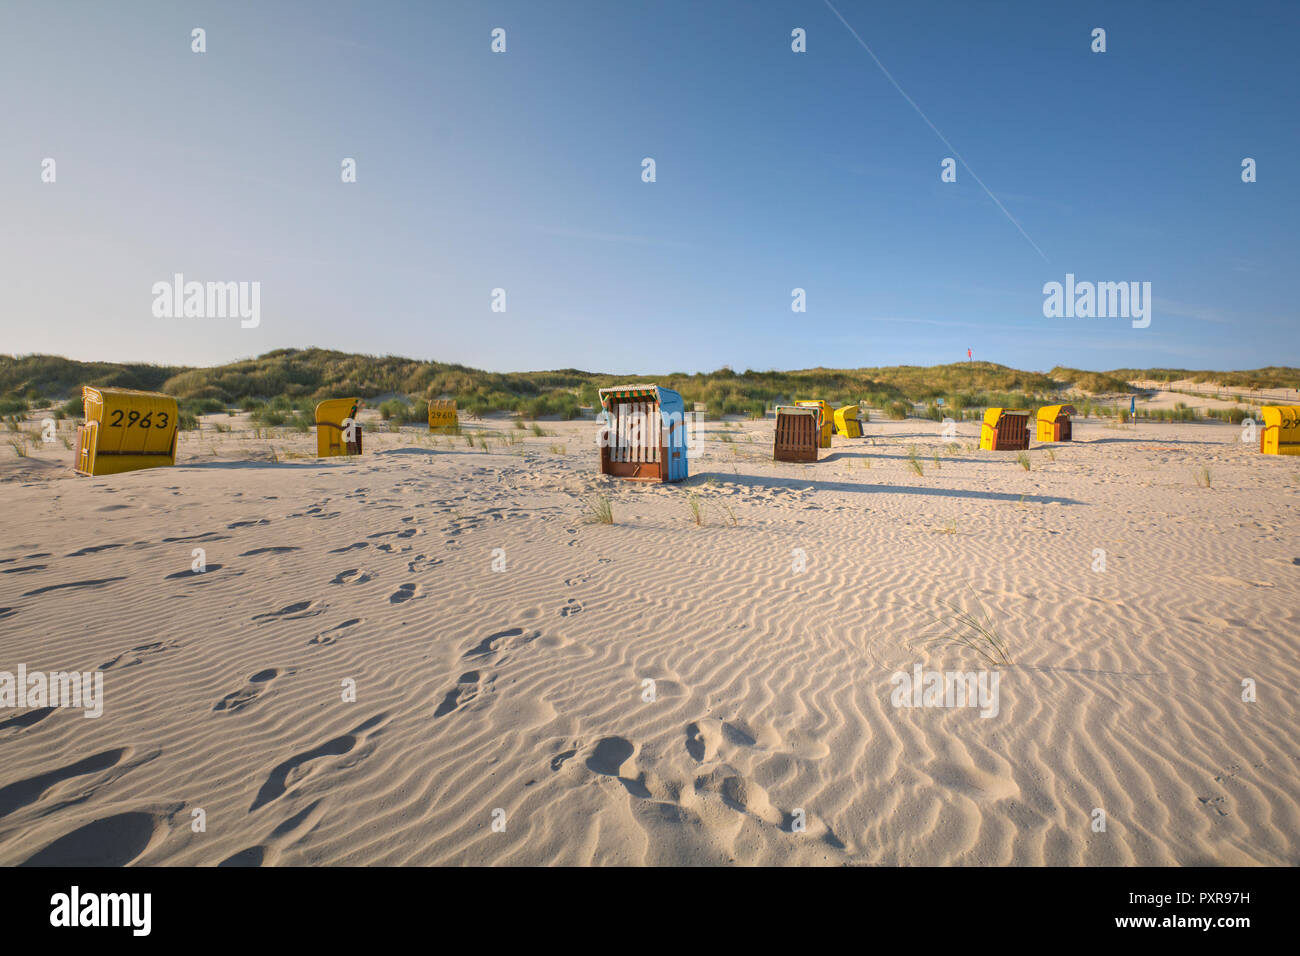 Germany, Lower Saxony, East Frisian Island, Juist, hooded beach chairs on the beach Stock Photo